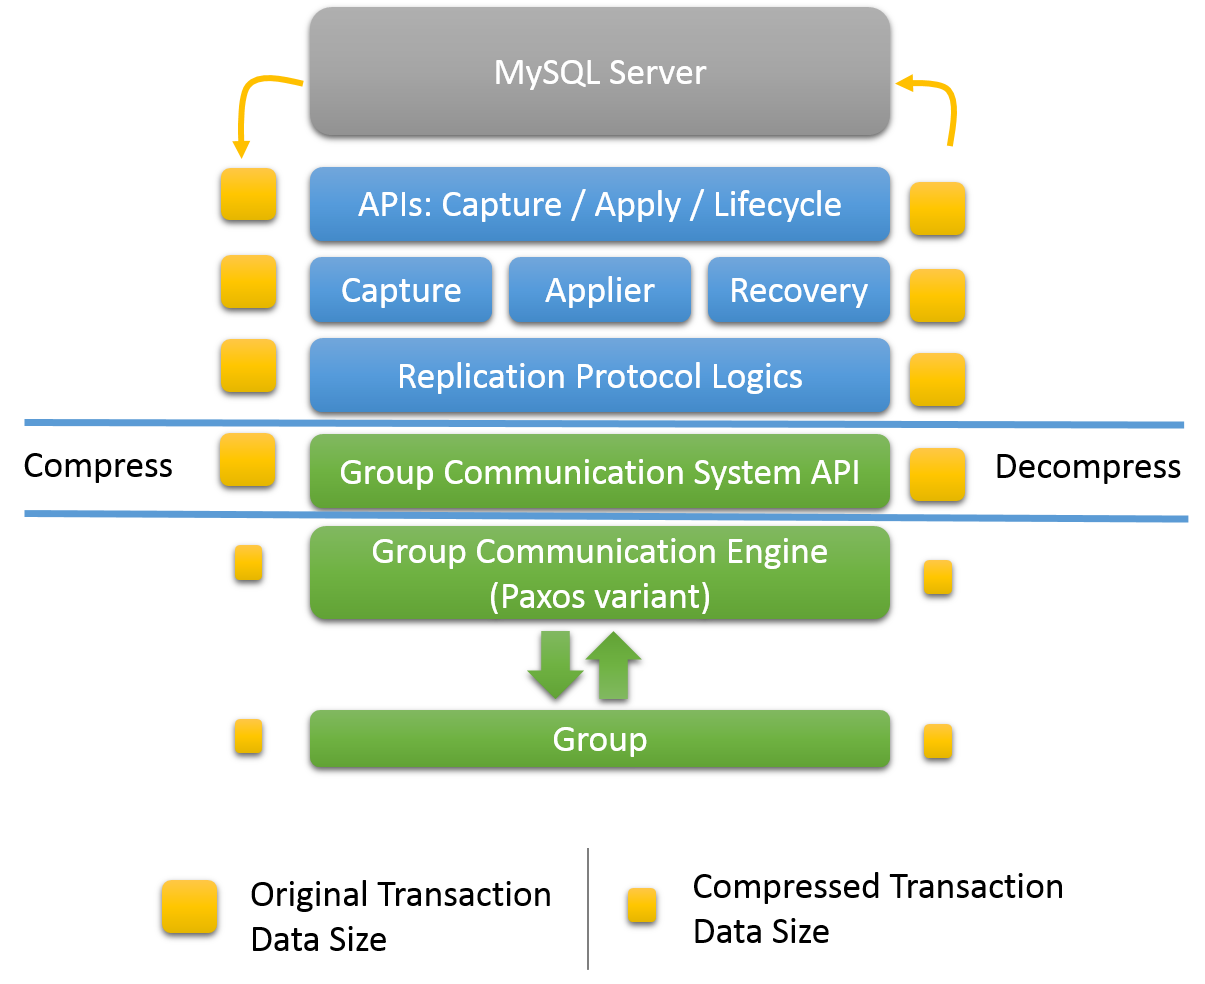 MySQL Group Replication插件体系结构如前面的主题所述，插件的五个层位于MySQL服务器和复制组之间。 压缩和解压缩由Group Communication System API处理，Group API是Group Replication插件的第四层。 组通信引擎（插件的第五层）和组成员使用具有较小数据大小的压缩事务​​。 MySQL服务器核心和组复制插件的三个较高层（API，捕获，应用程序和恢复组件以及复制协议模块）使用具有较大数据大小的原始事务。